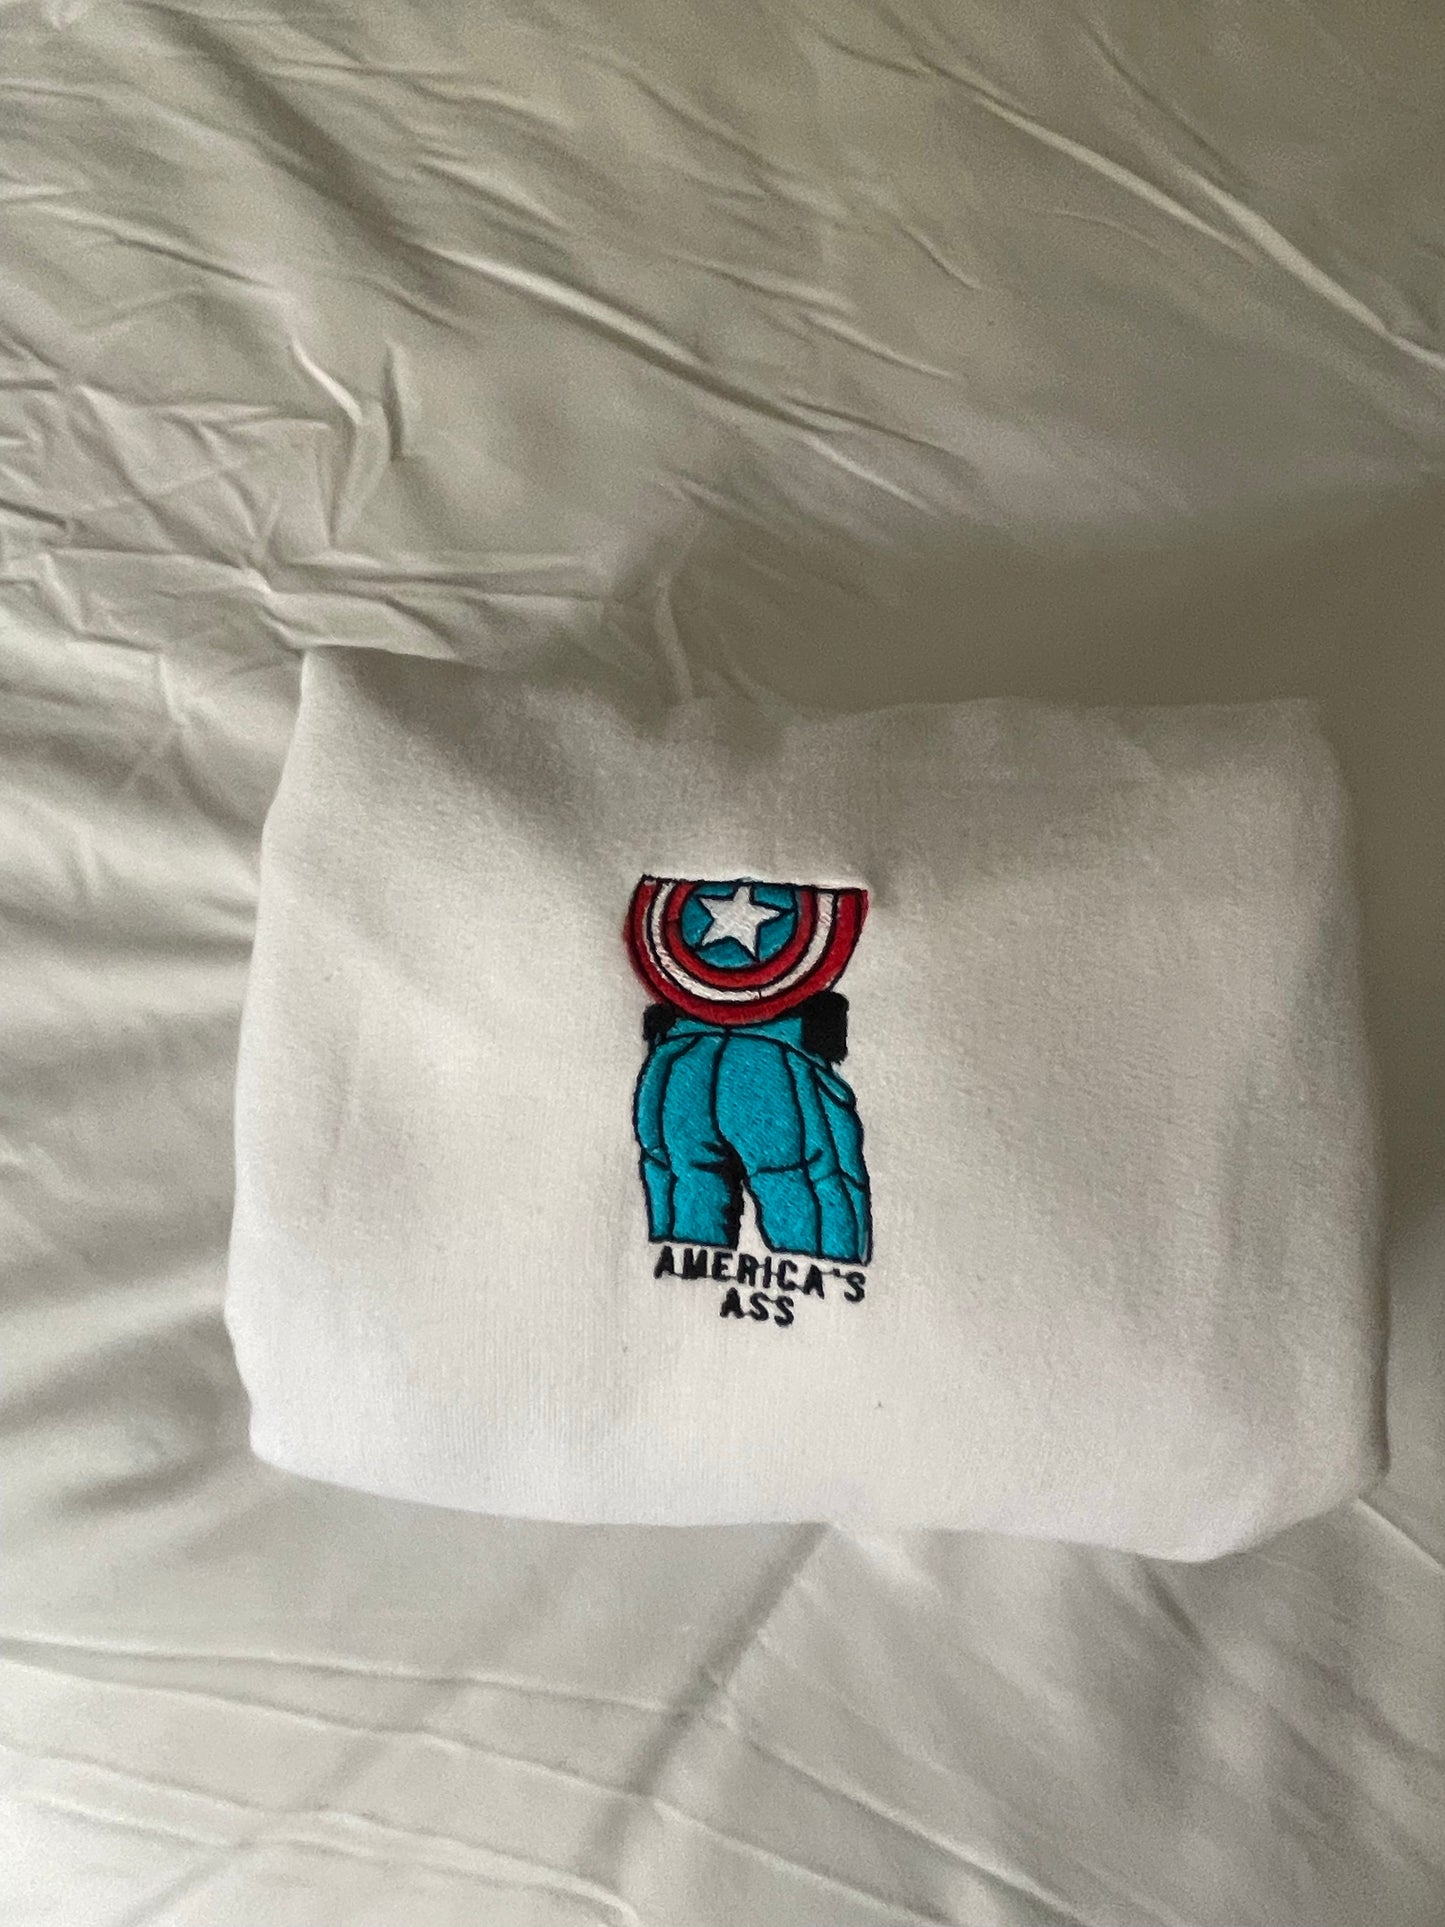 Captain America, Americas Ass embroidered sweatshirt